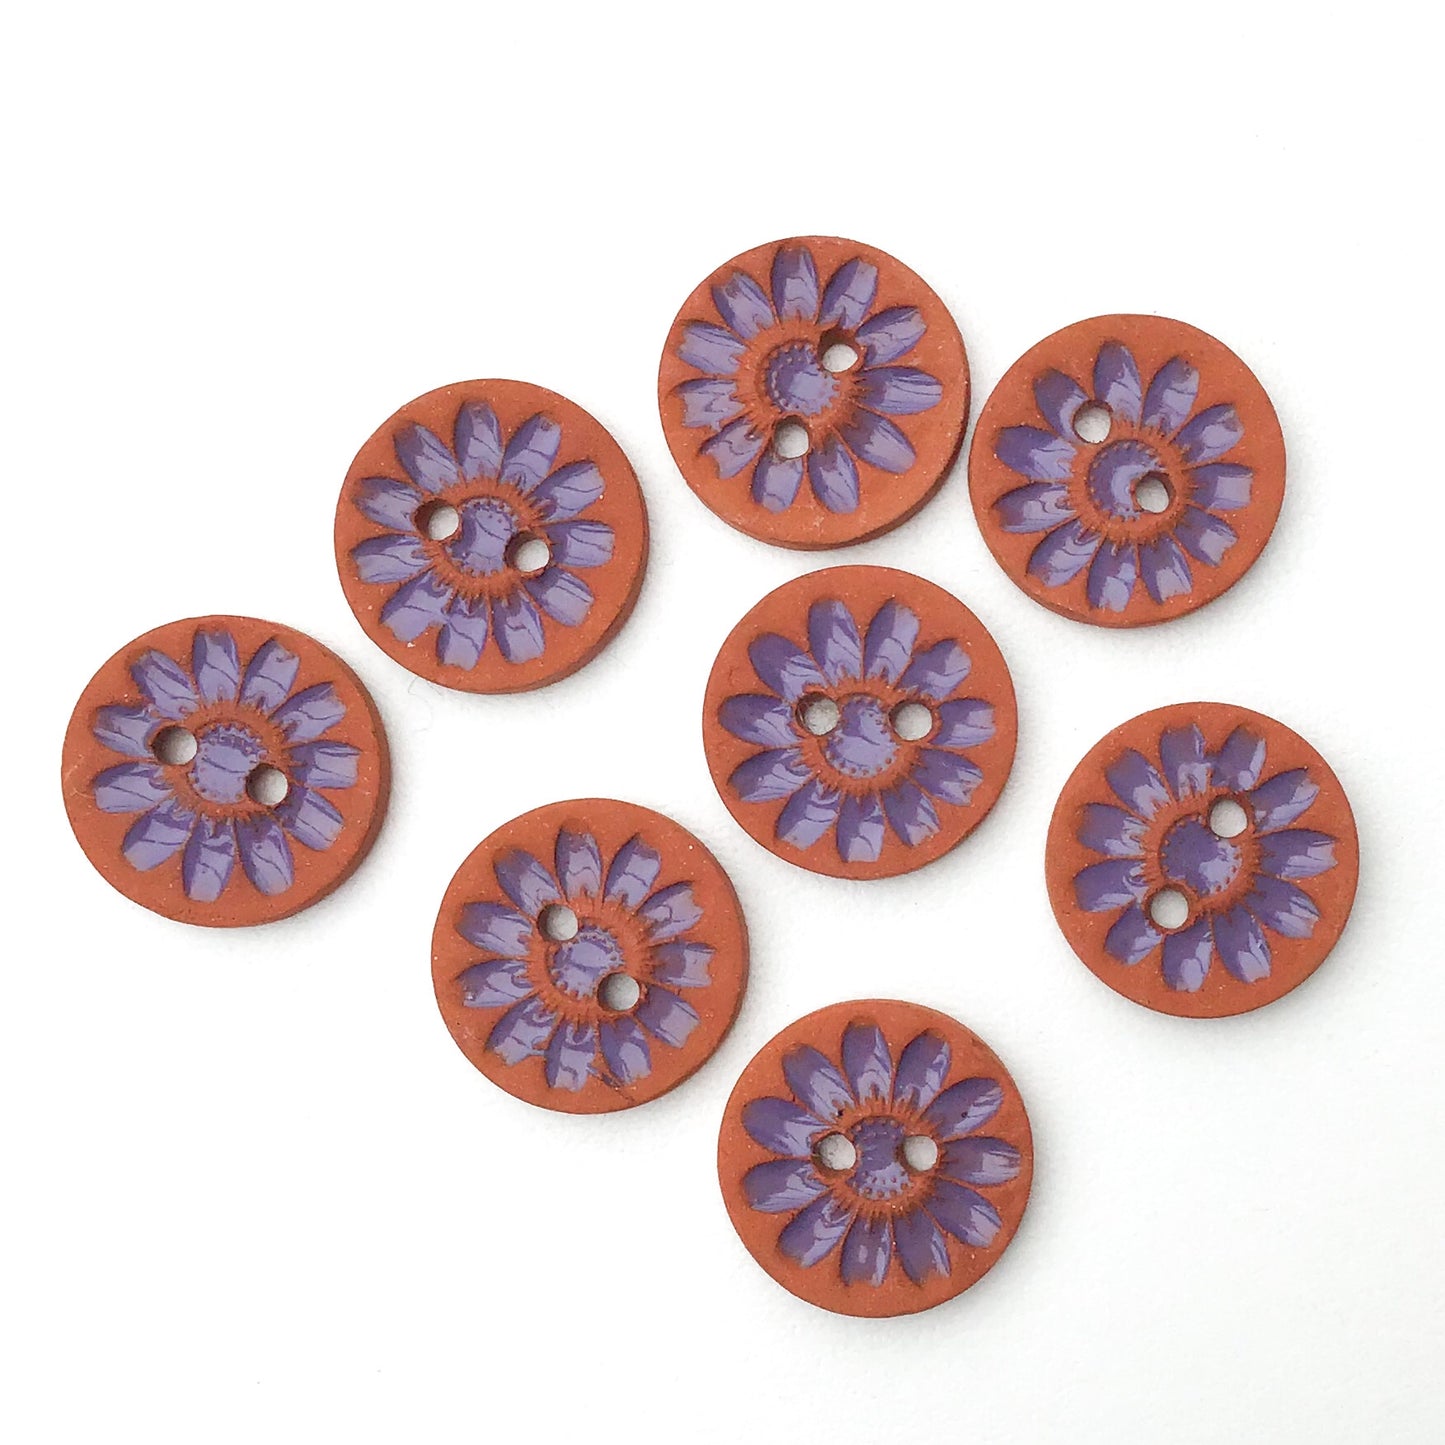 Ceramic Mum Flower Buttons - Small Ceramic Flower Buttons - Purple - 11/16" - 8 Pack (ws-35)